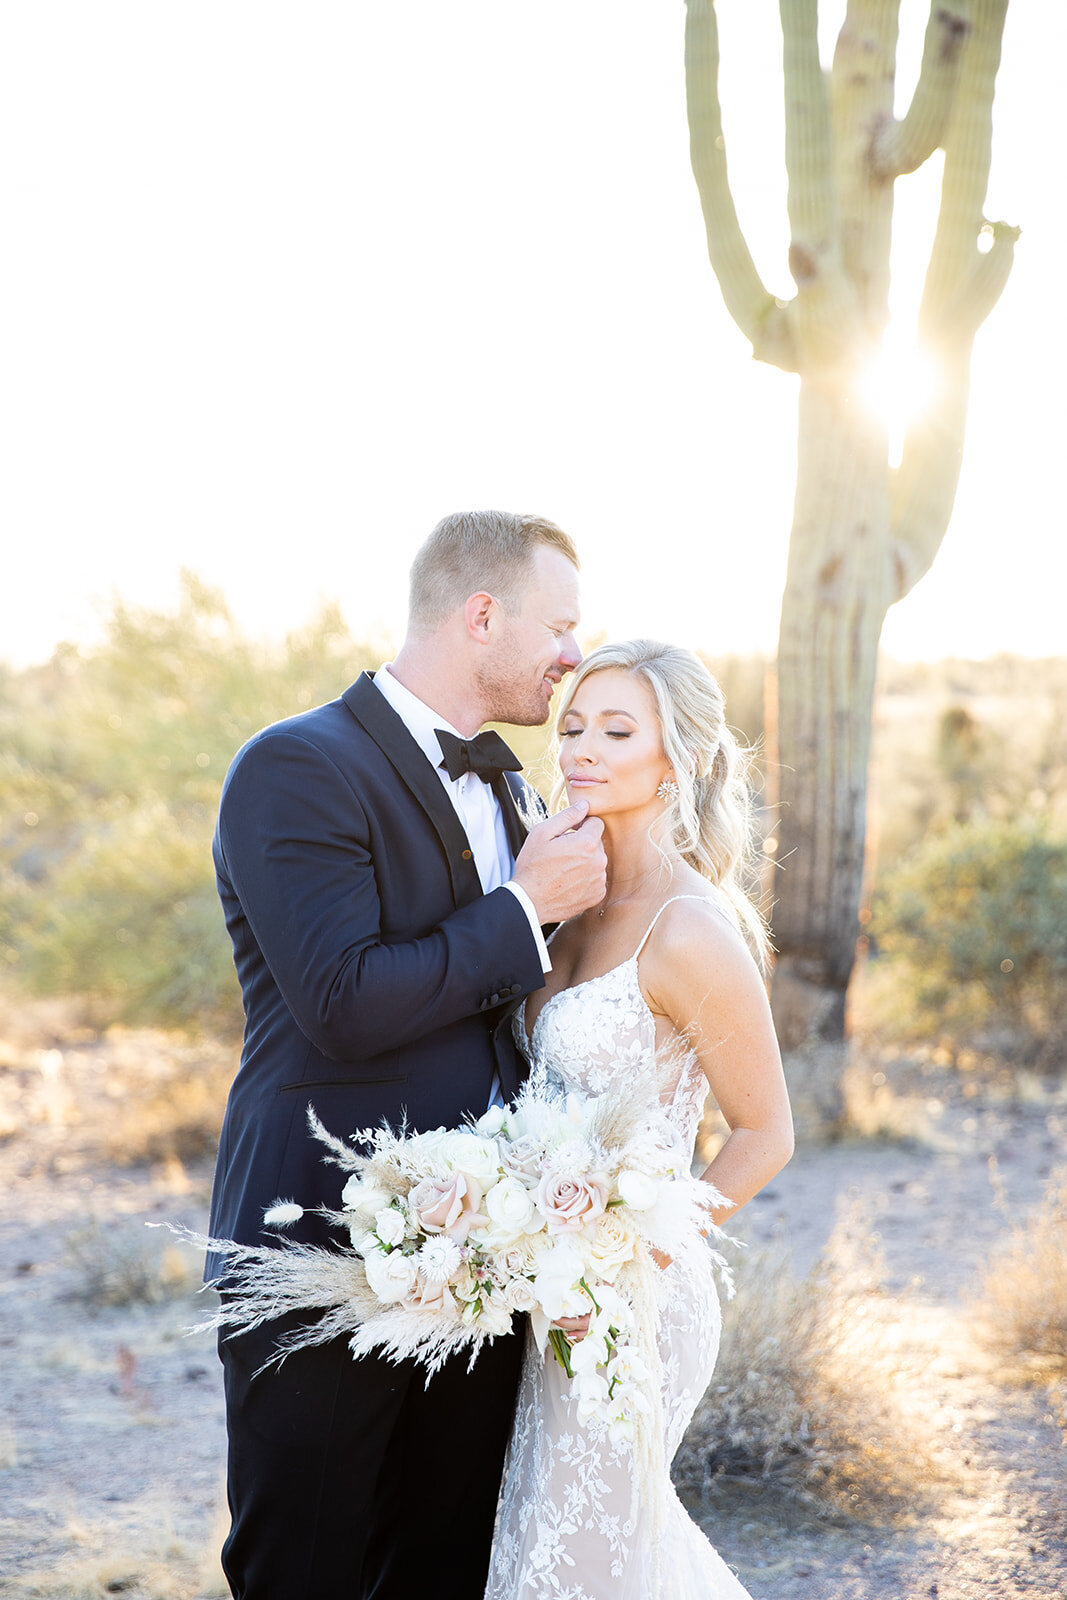 Karlie Colleen Photography - Ashley & Grant Wedding - The Paseo - Phoenix Arizona-757